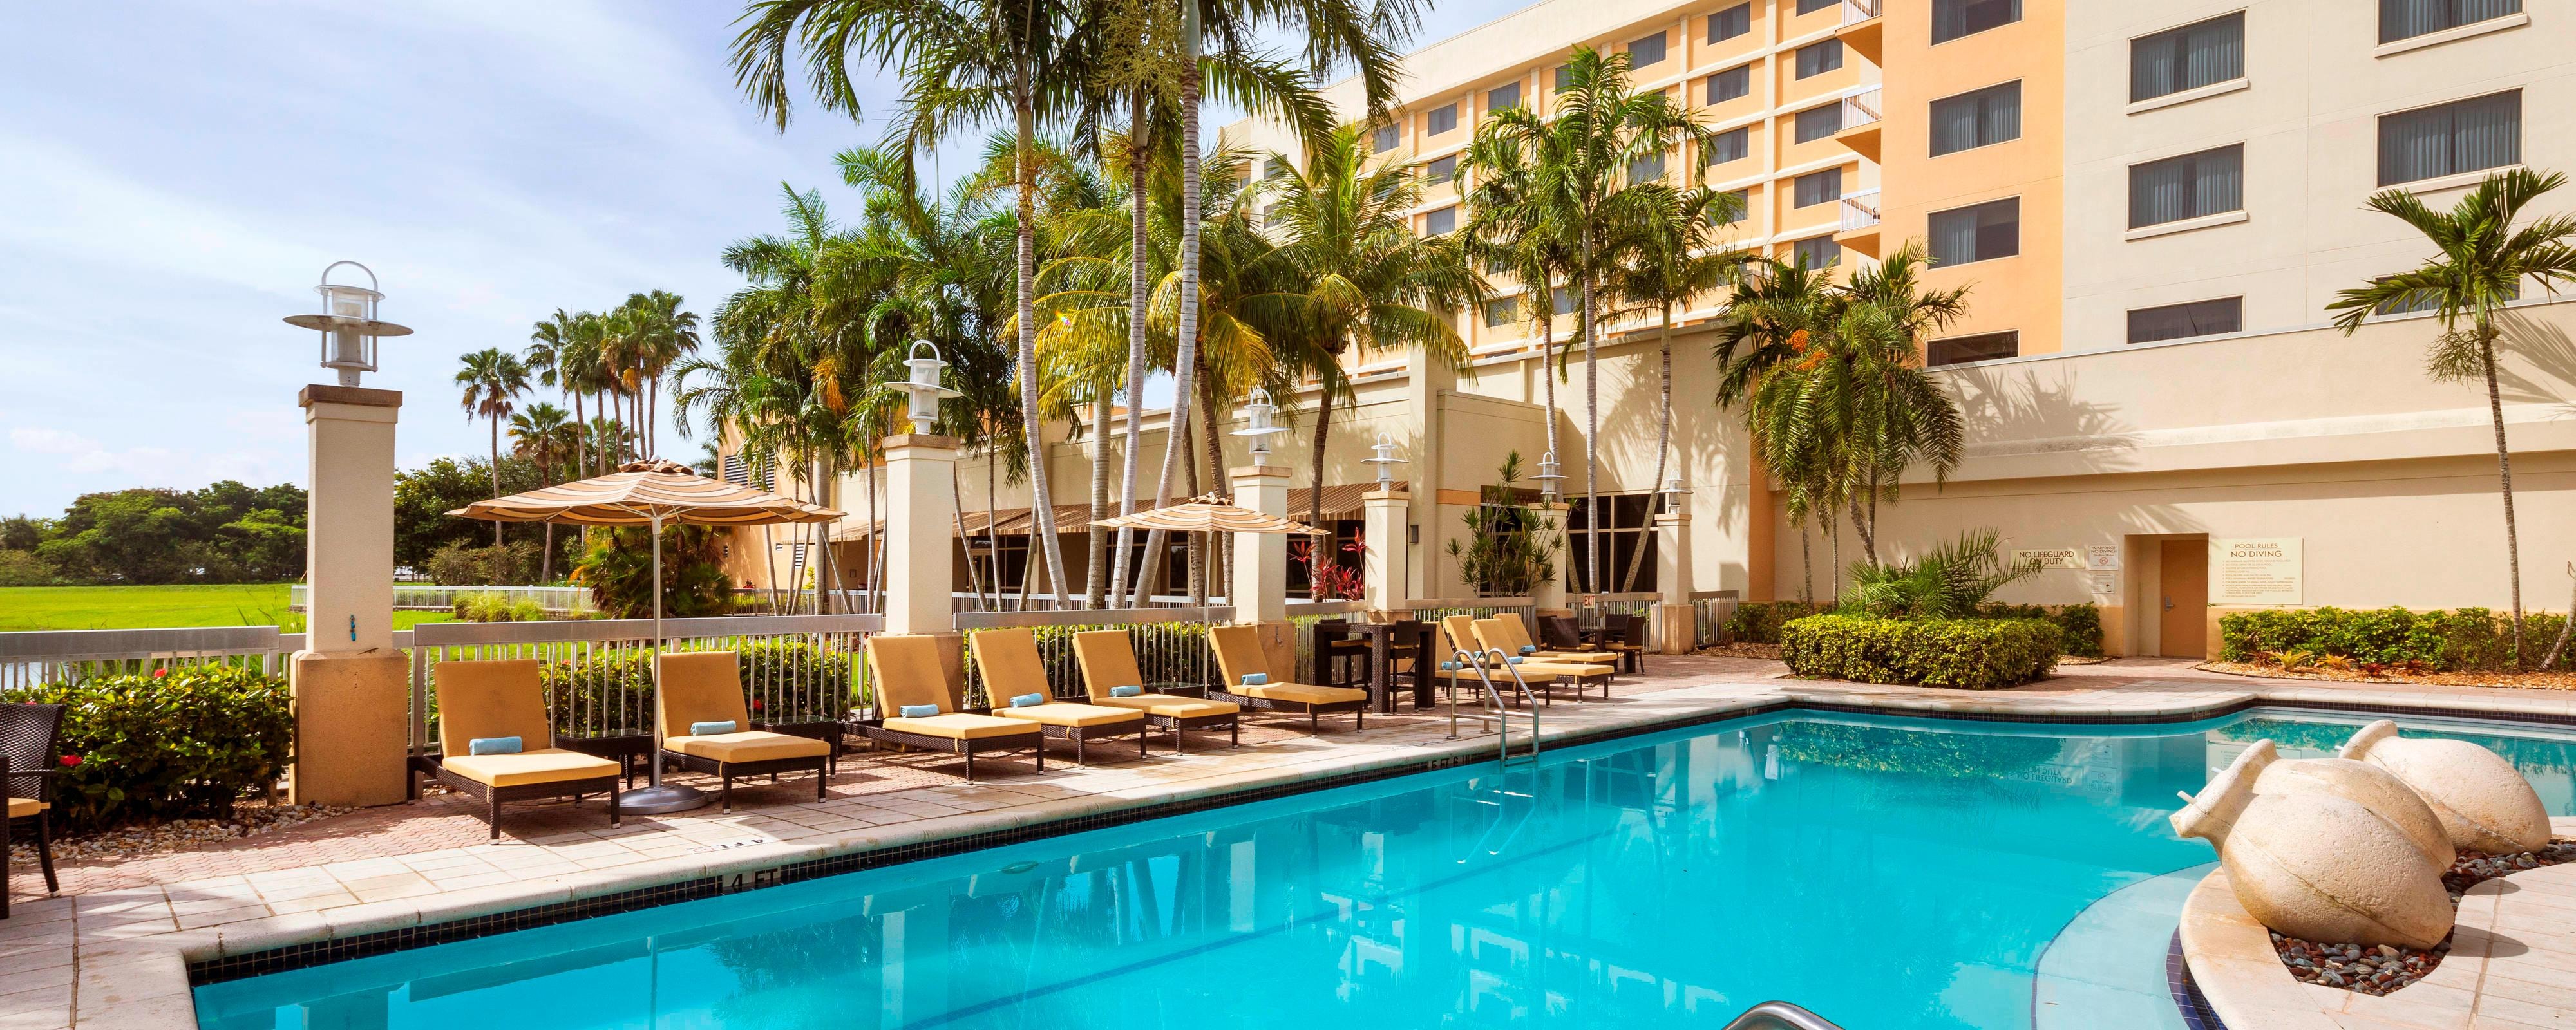 Outdoor Hotel Pool Plantation, FL | Renaissance Fort Lauderdale